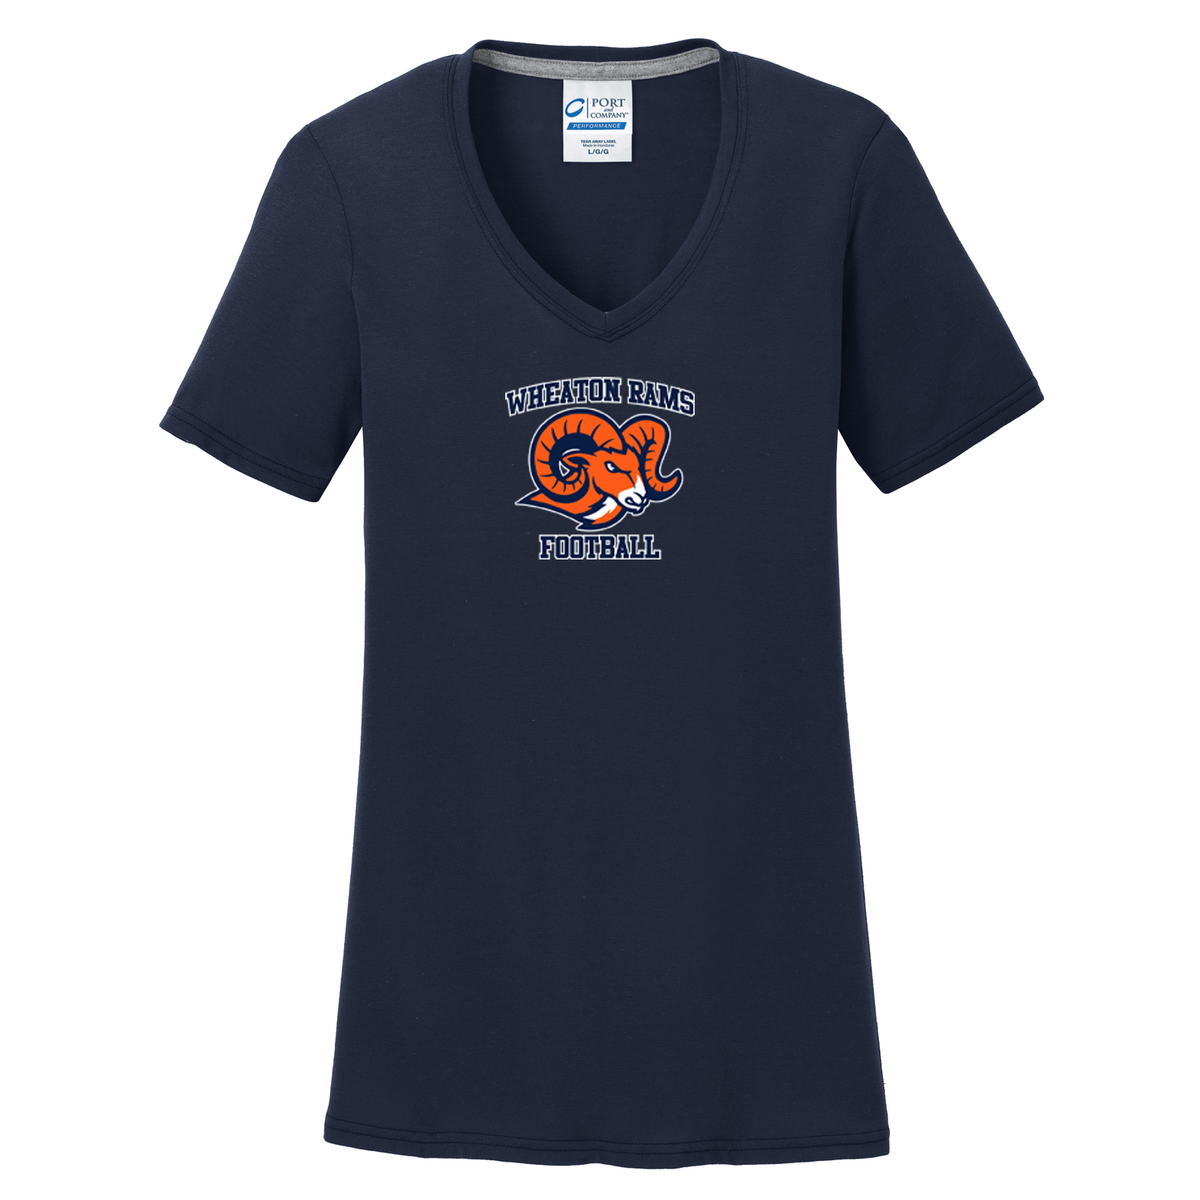 Wheaton Rams Football Women's T-Shirt